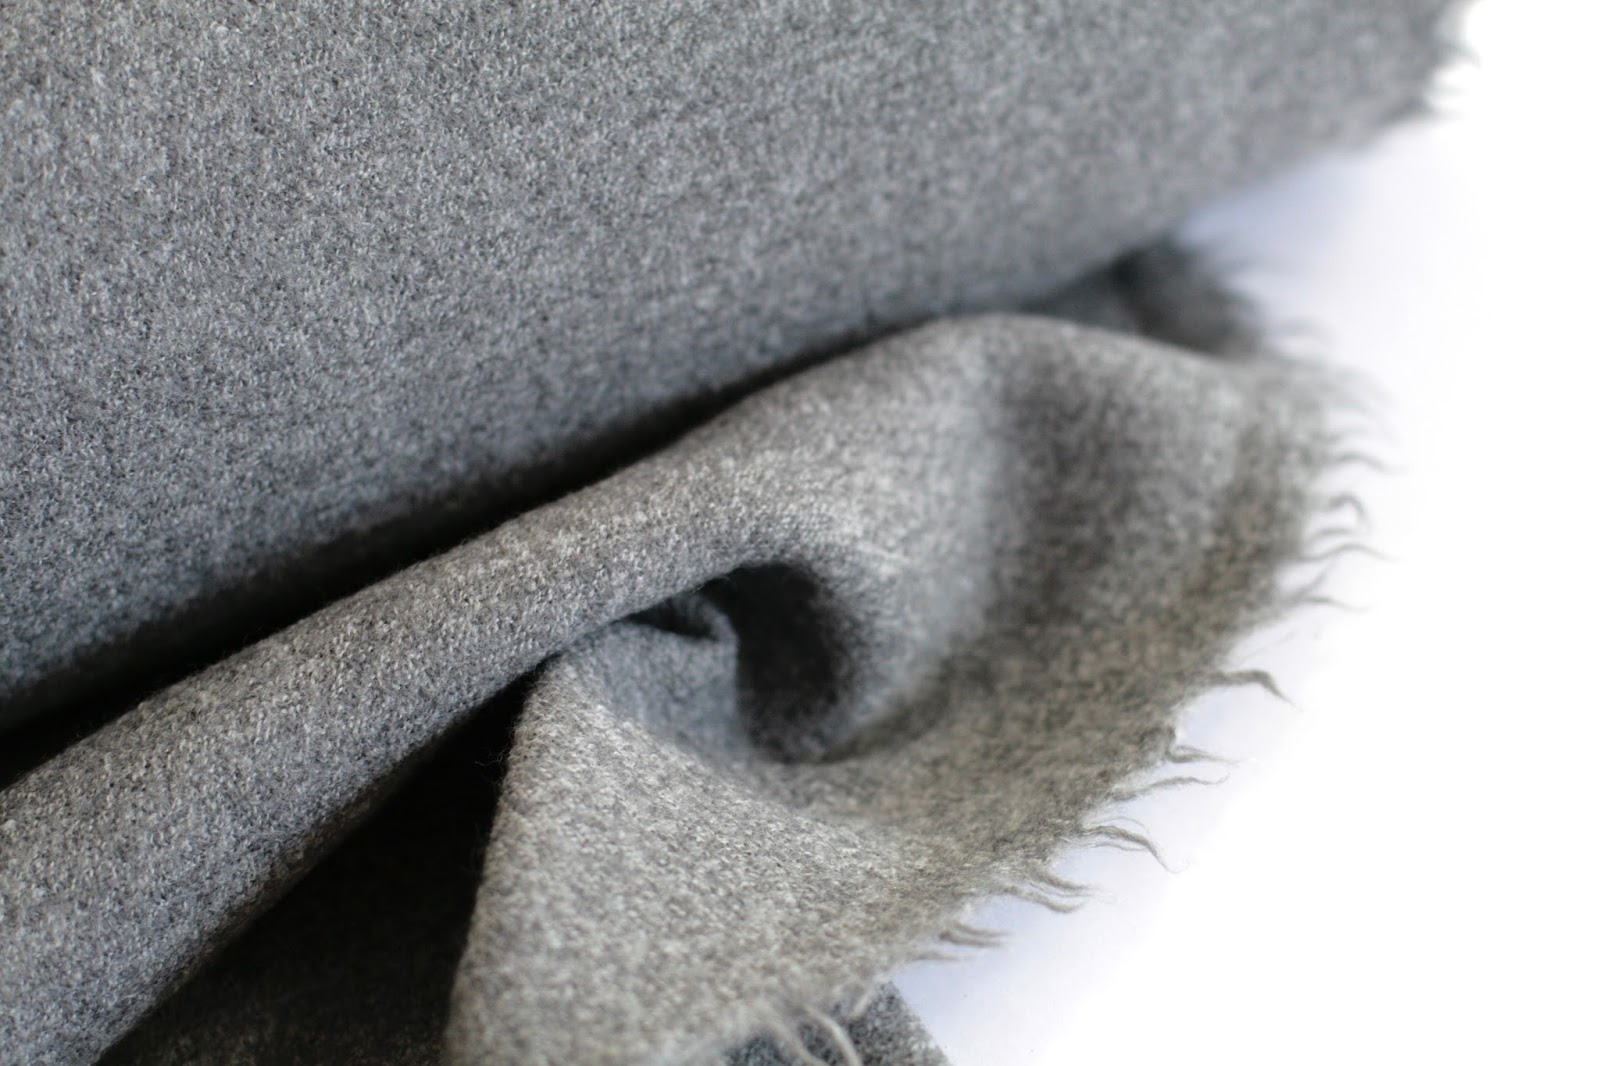 Boiled Wool Grey - YES Fabrics